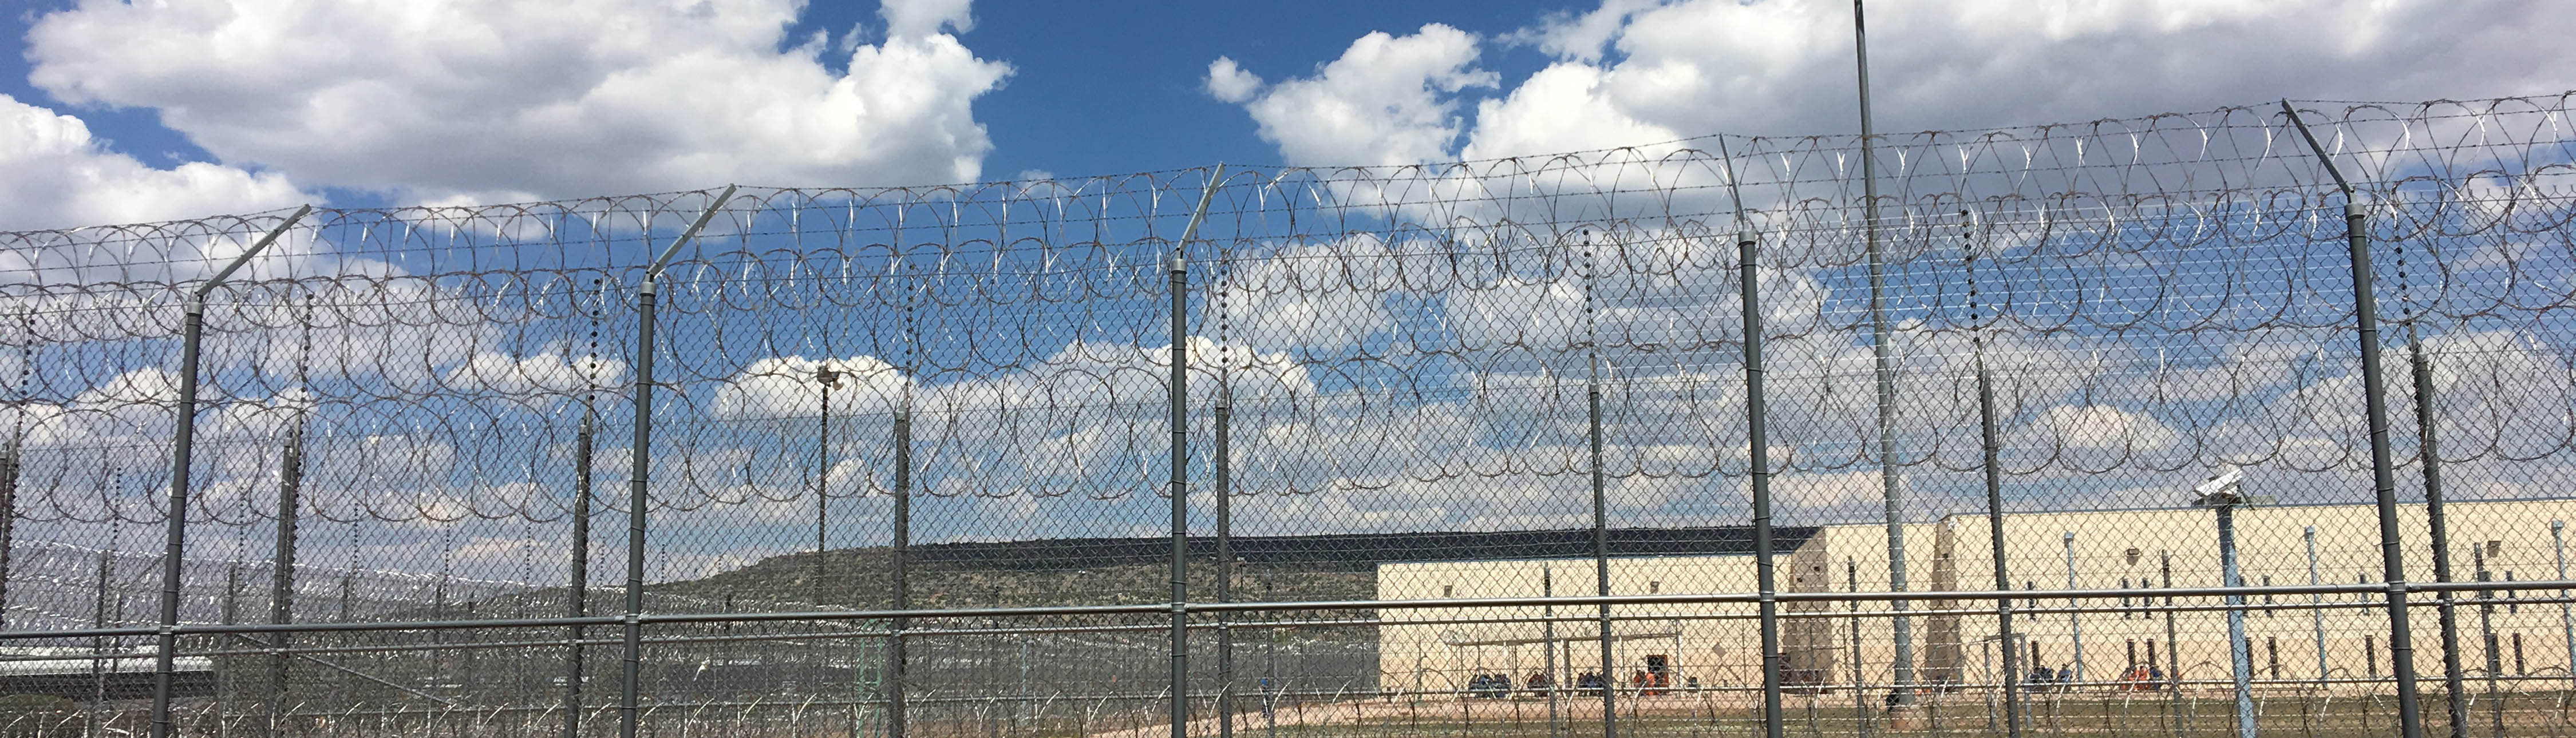 Photo of Cibola Detention Center in New Mexico